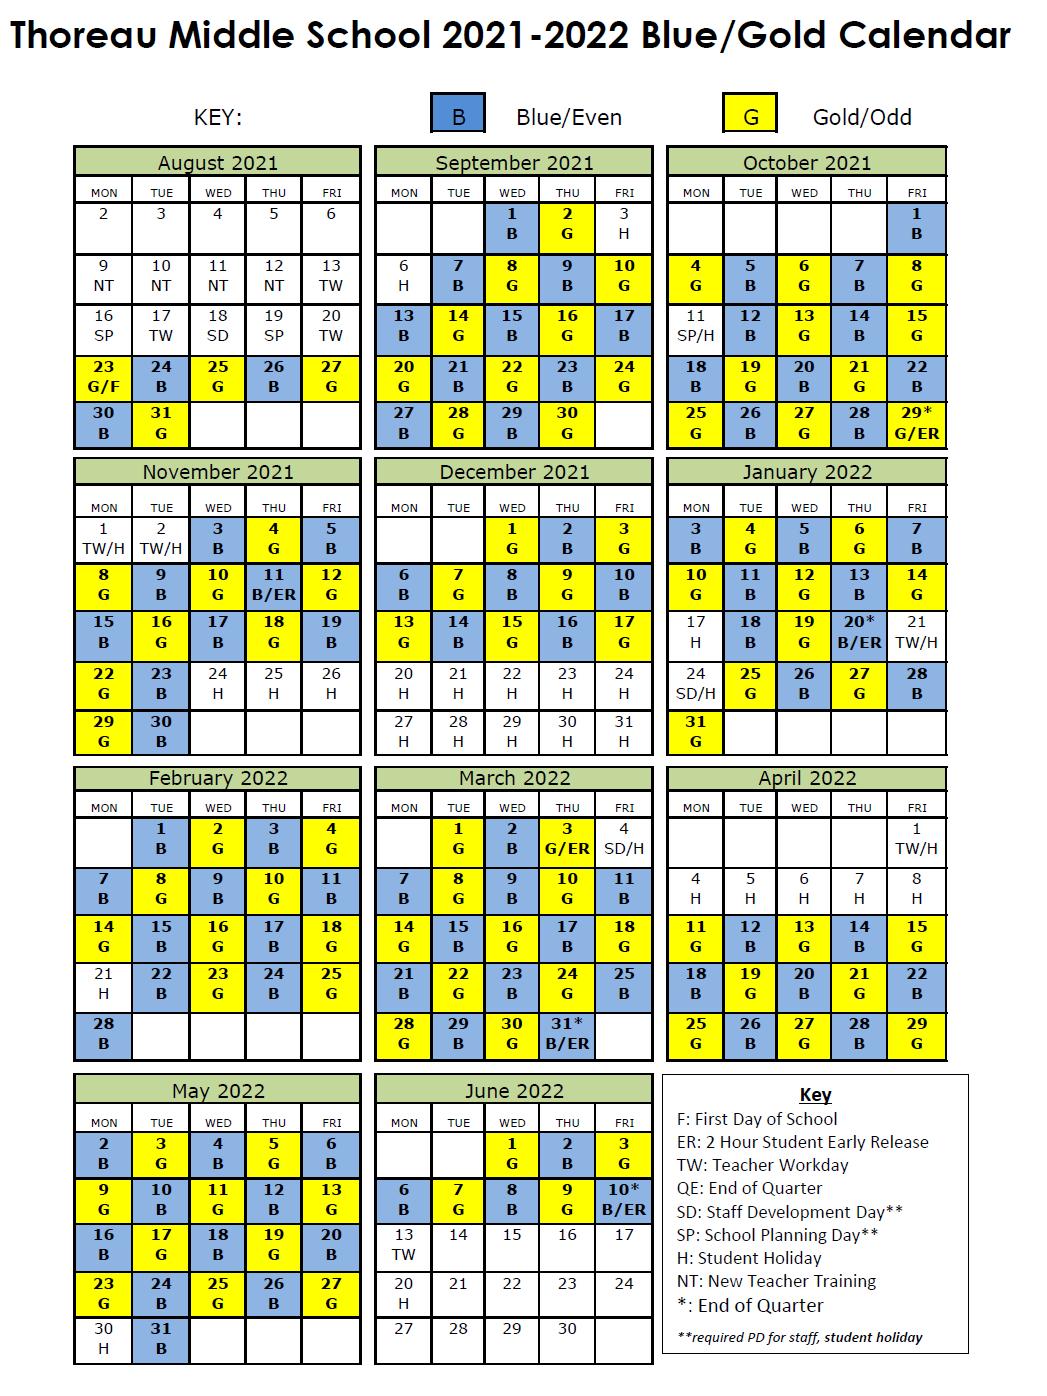 Fairfax County Calendar 2022 Blue/Gold Day Calendar | Thoreau Middle School